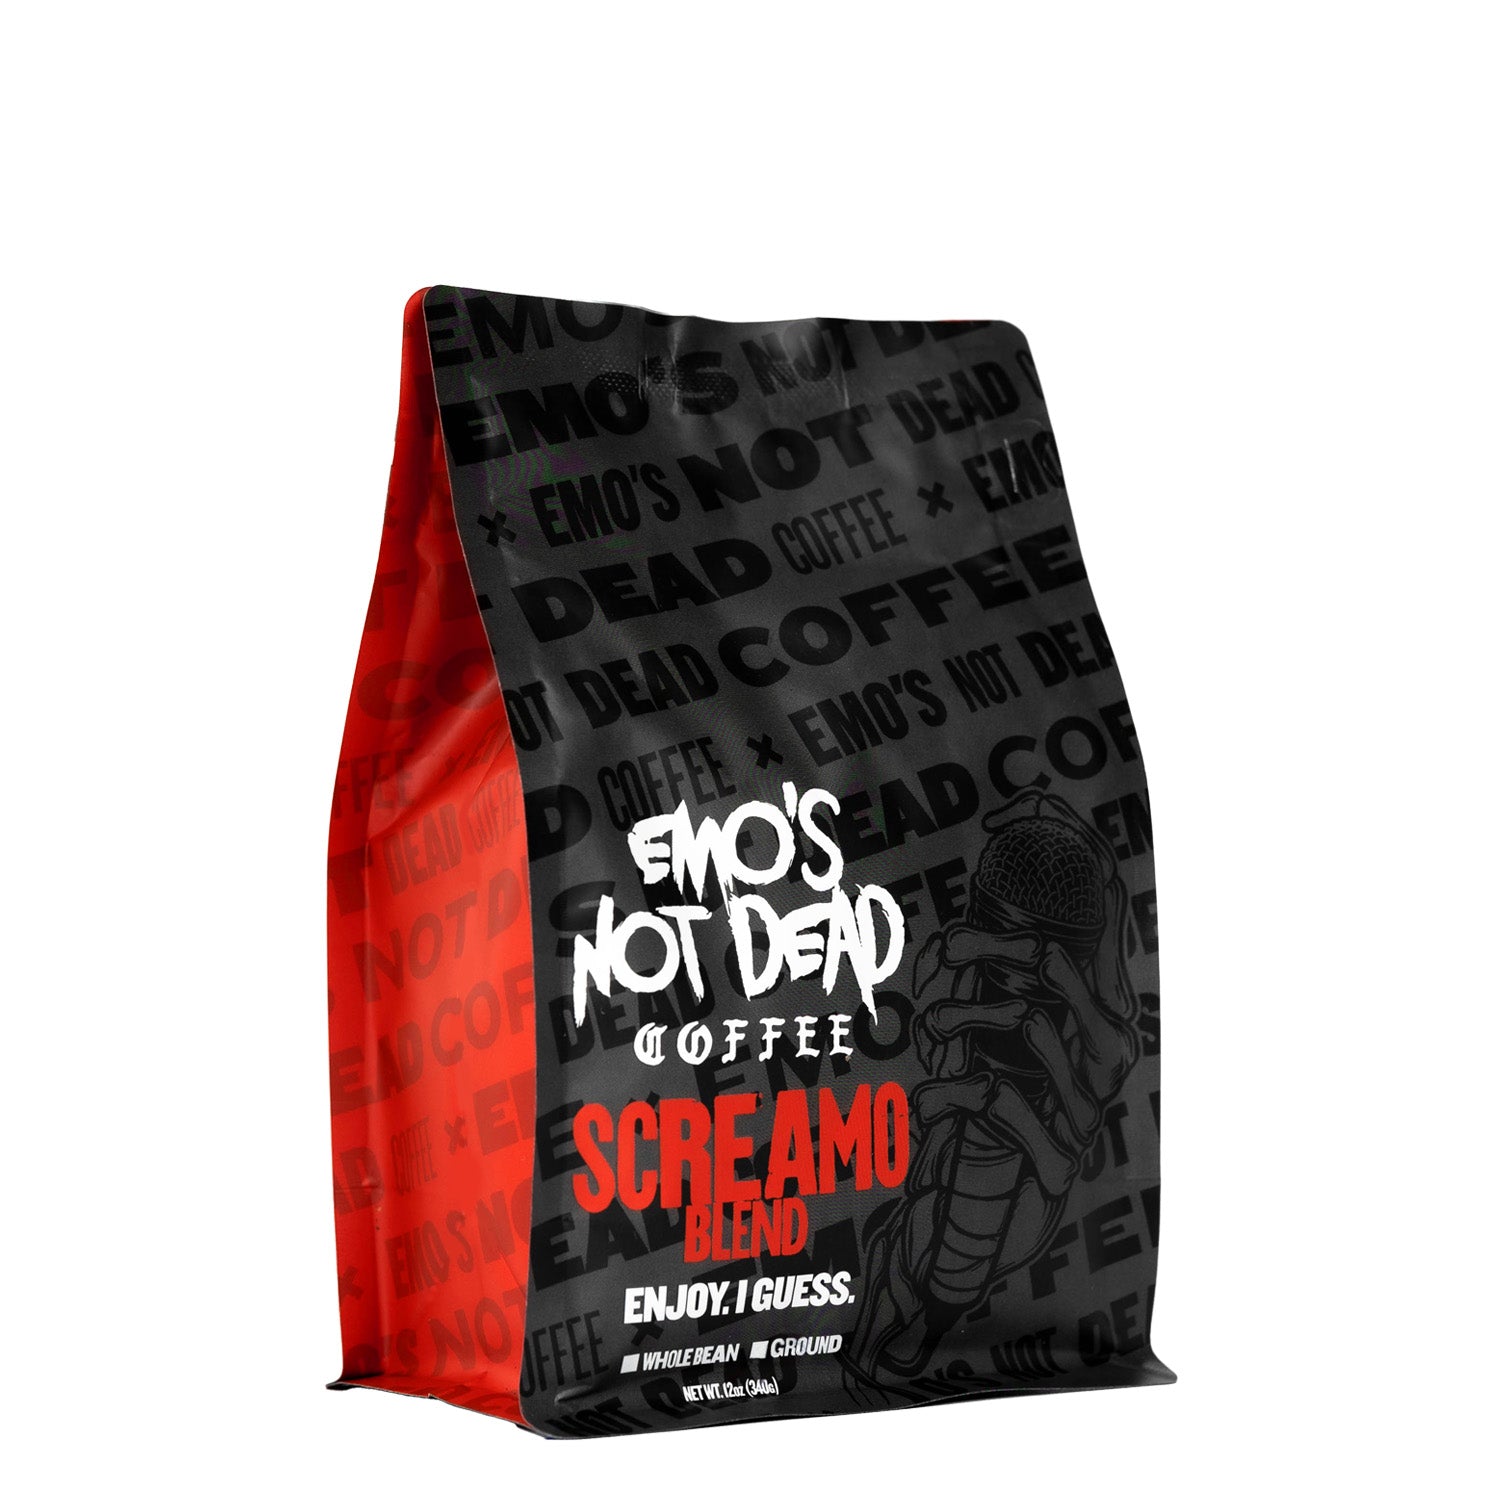 Emo’s Not Dead, Band Merch, Screamo Blend Coffee